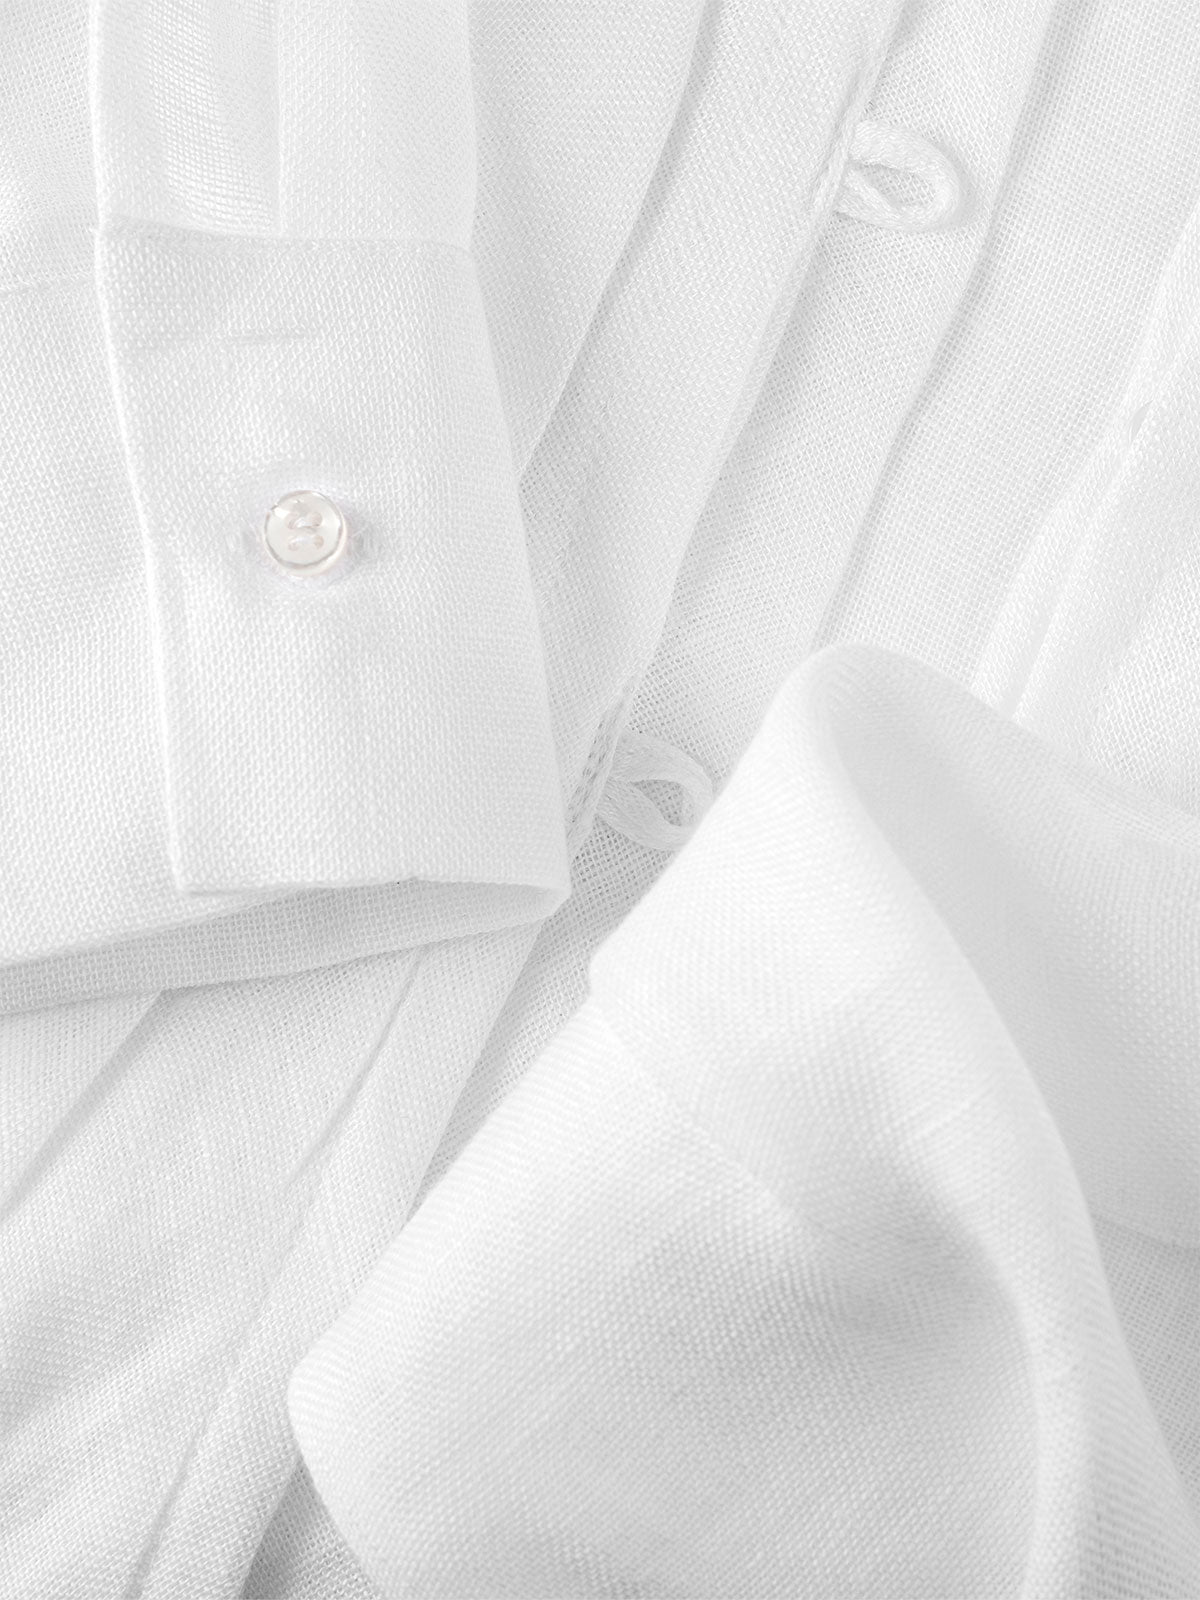 Camicia fiocco white details 100% Capri